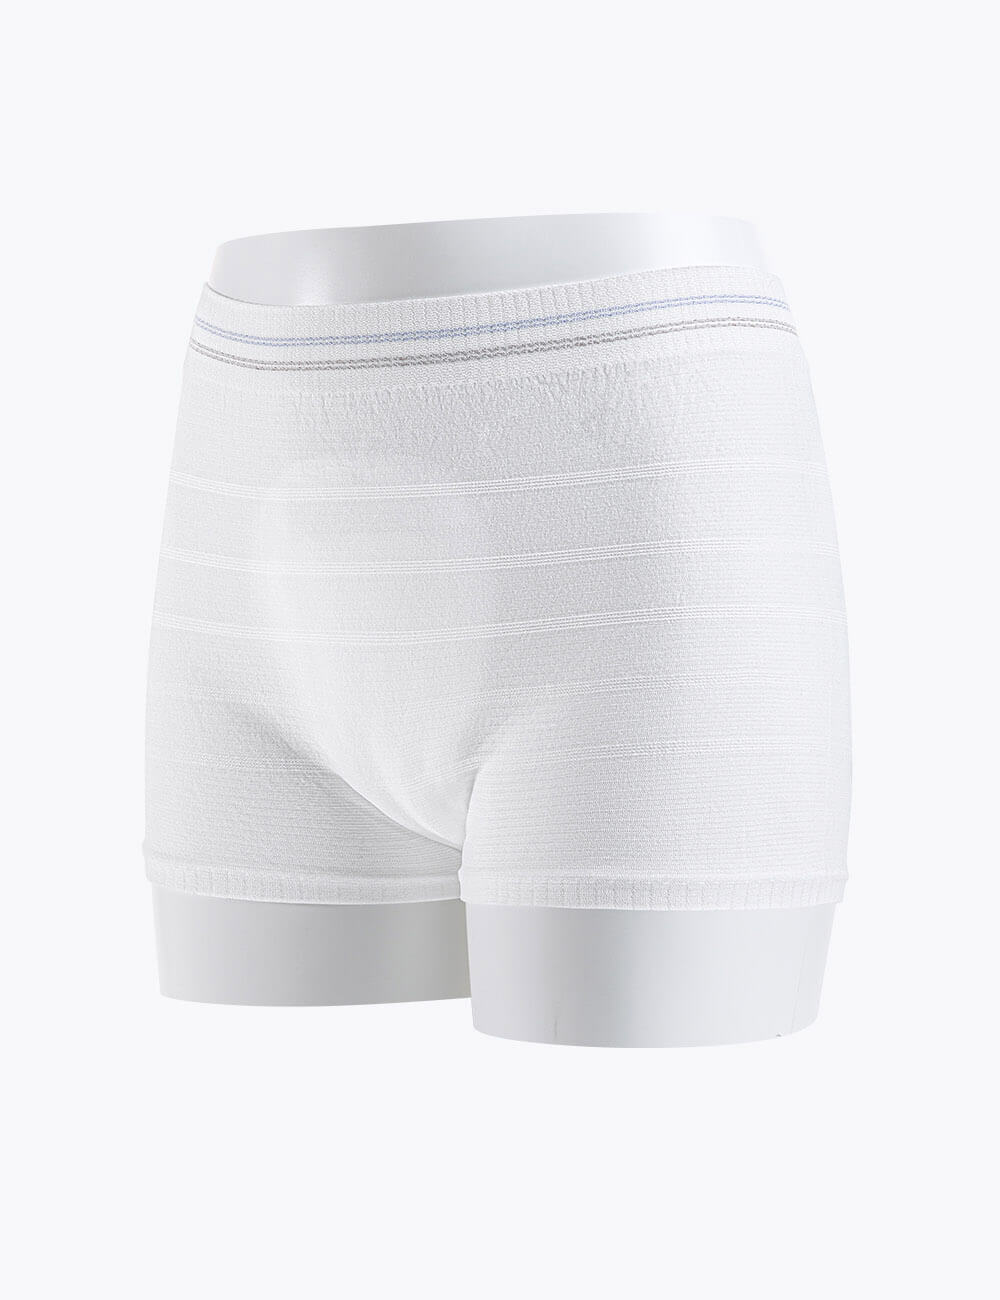 Mesh Underwear Postpartum 10 Pack Disposable Mesh Panties